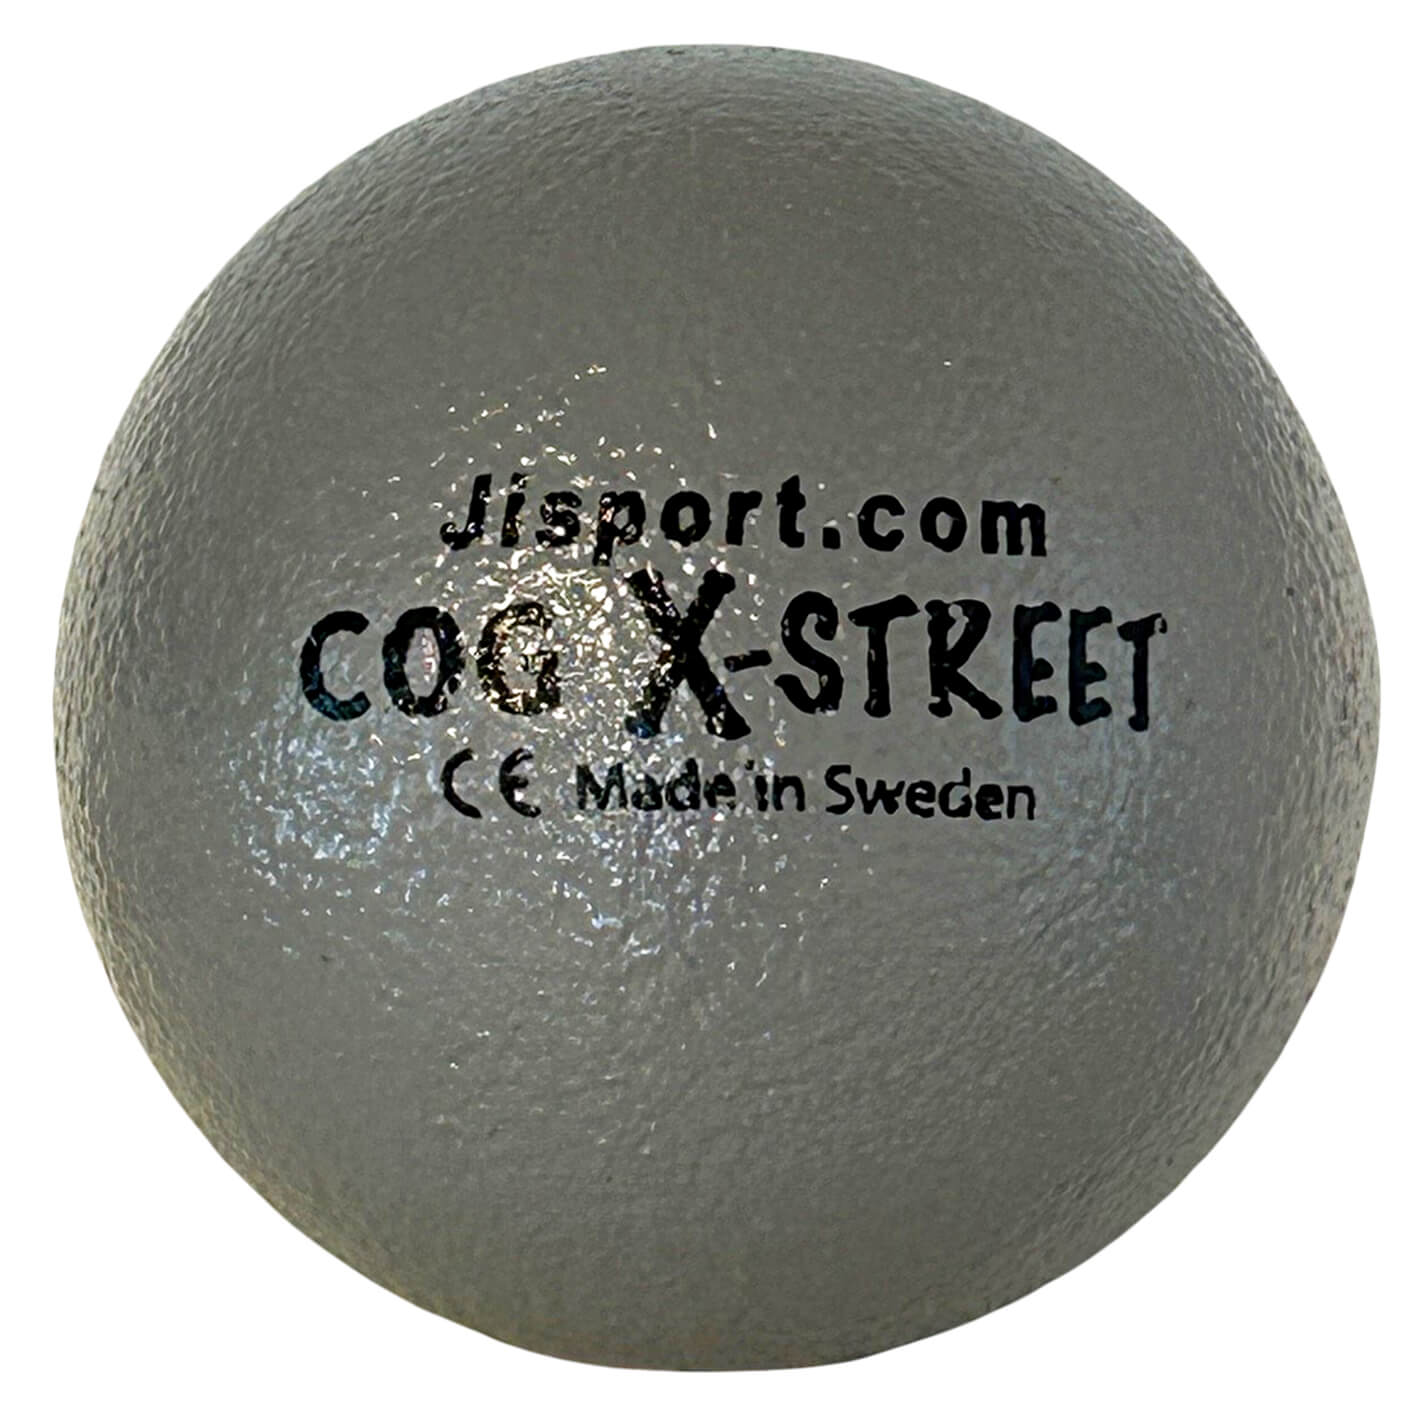 COG X-Street pakke